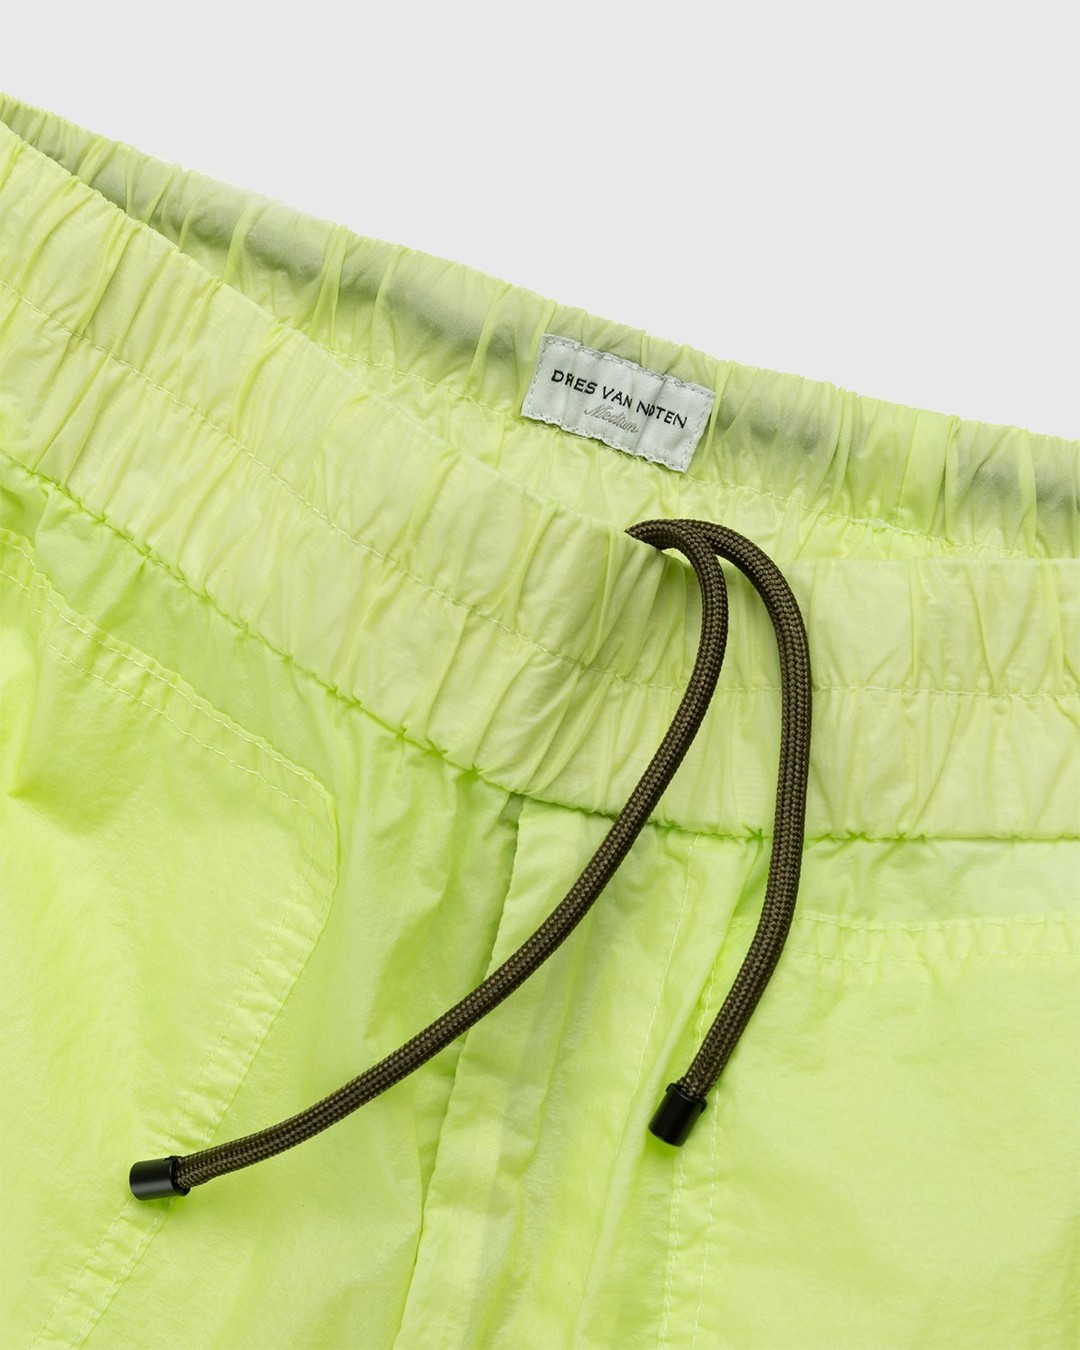 Dries van Noten – Pooles Shorts Lime - Swim Shorts - Green - Image 5